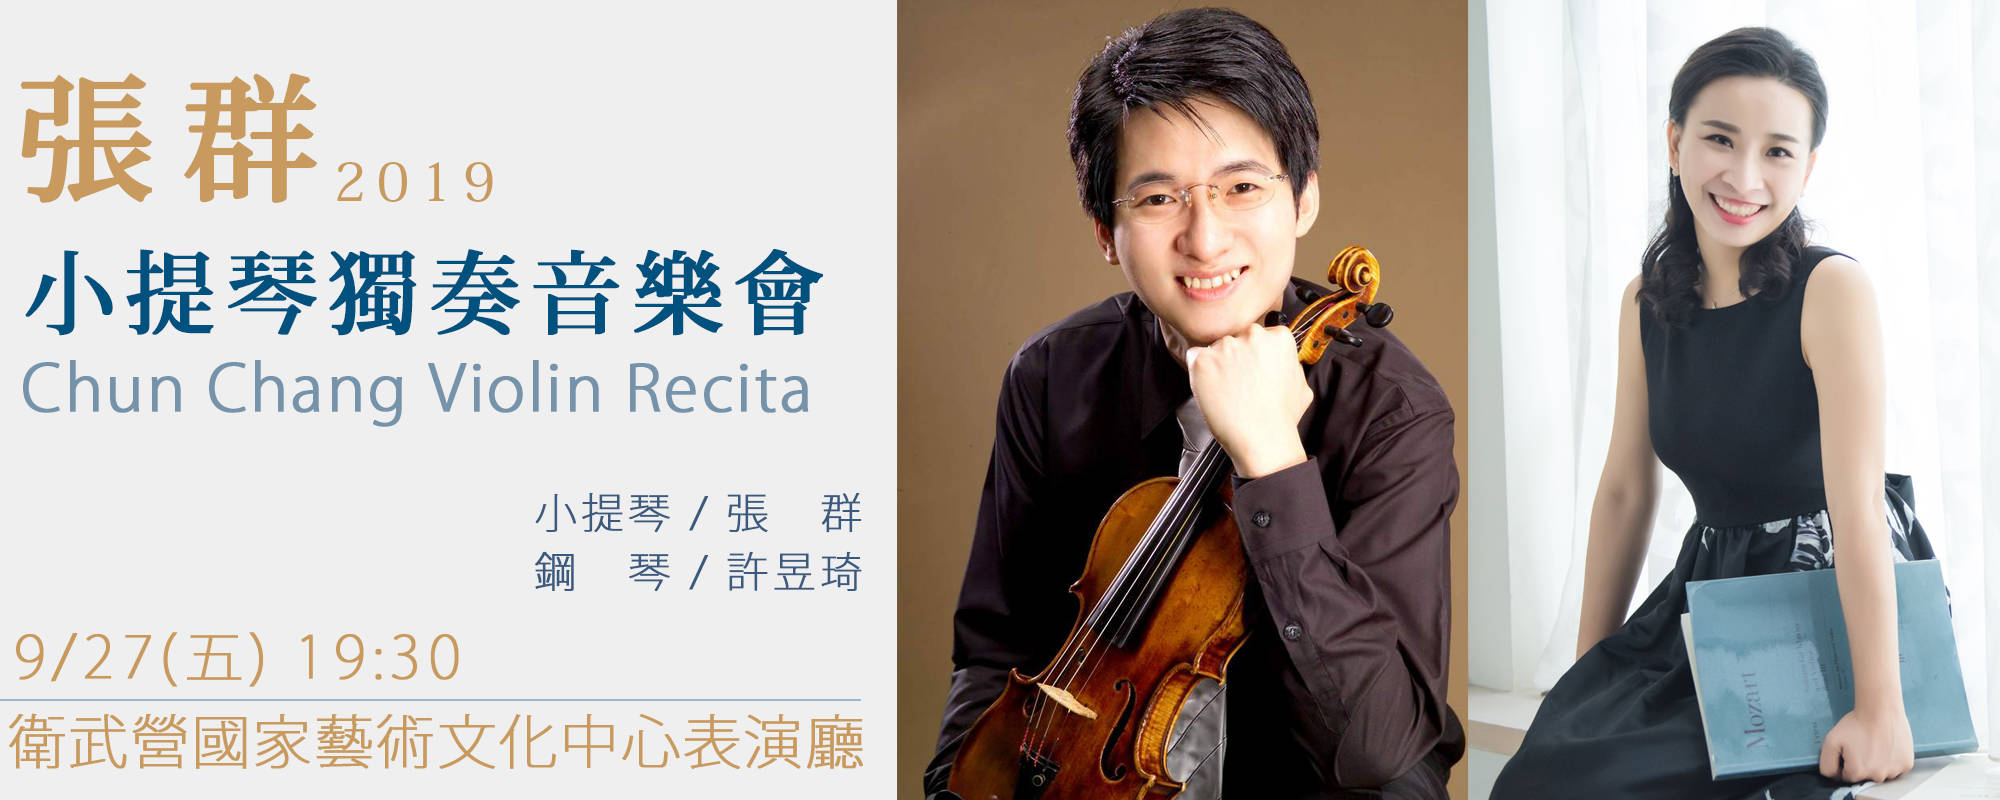 Chun Chang Violin Recita